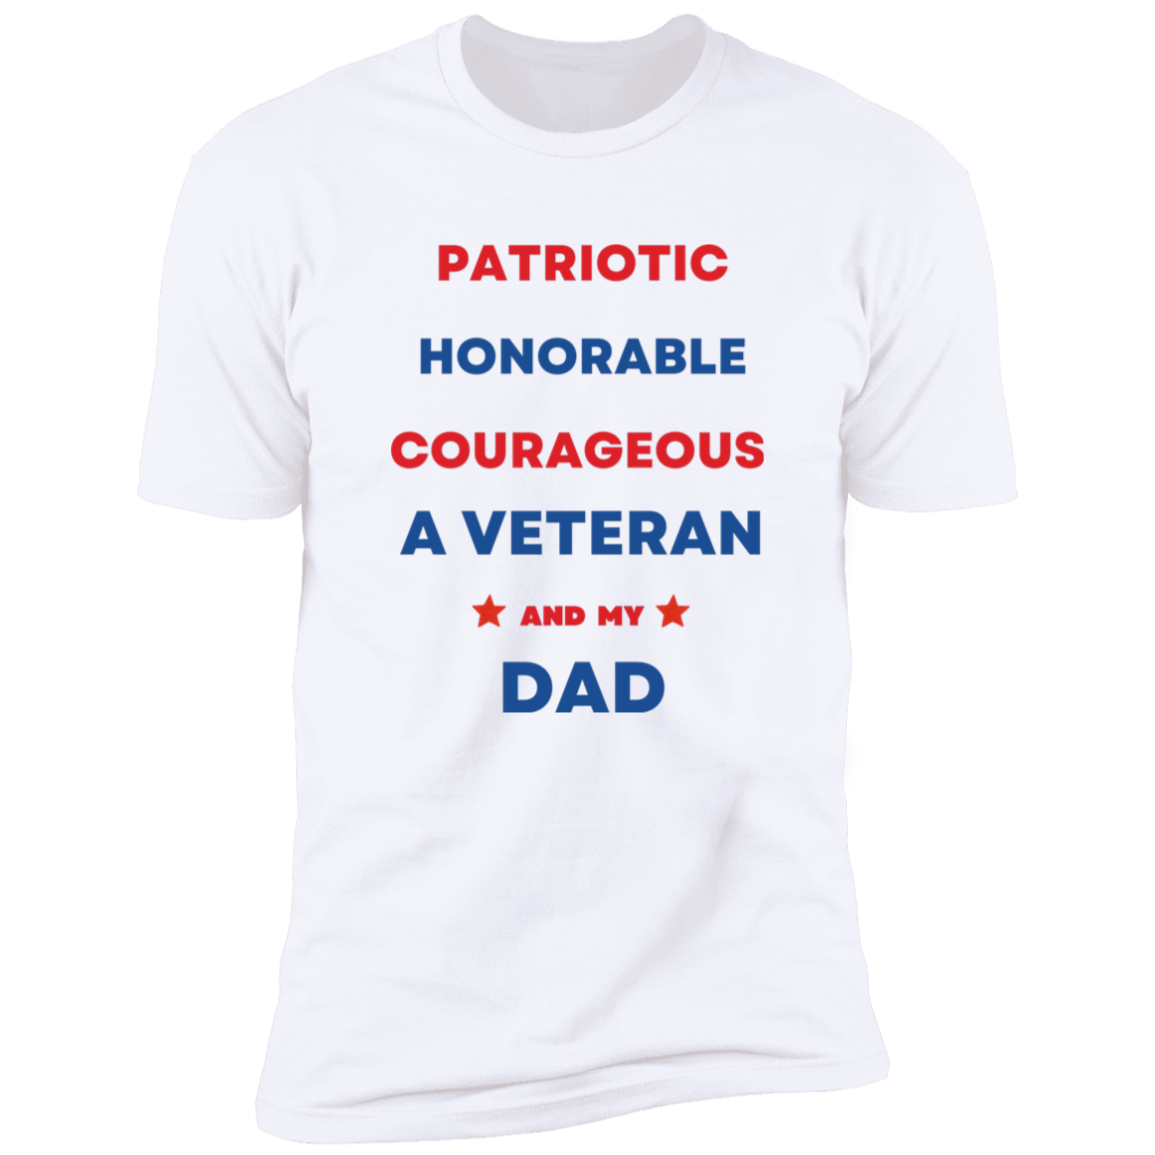 My Dad is a Honorable Veteran